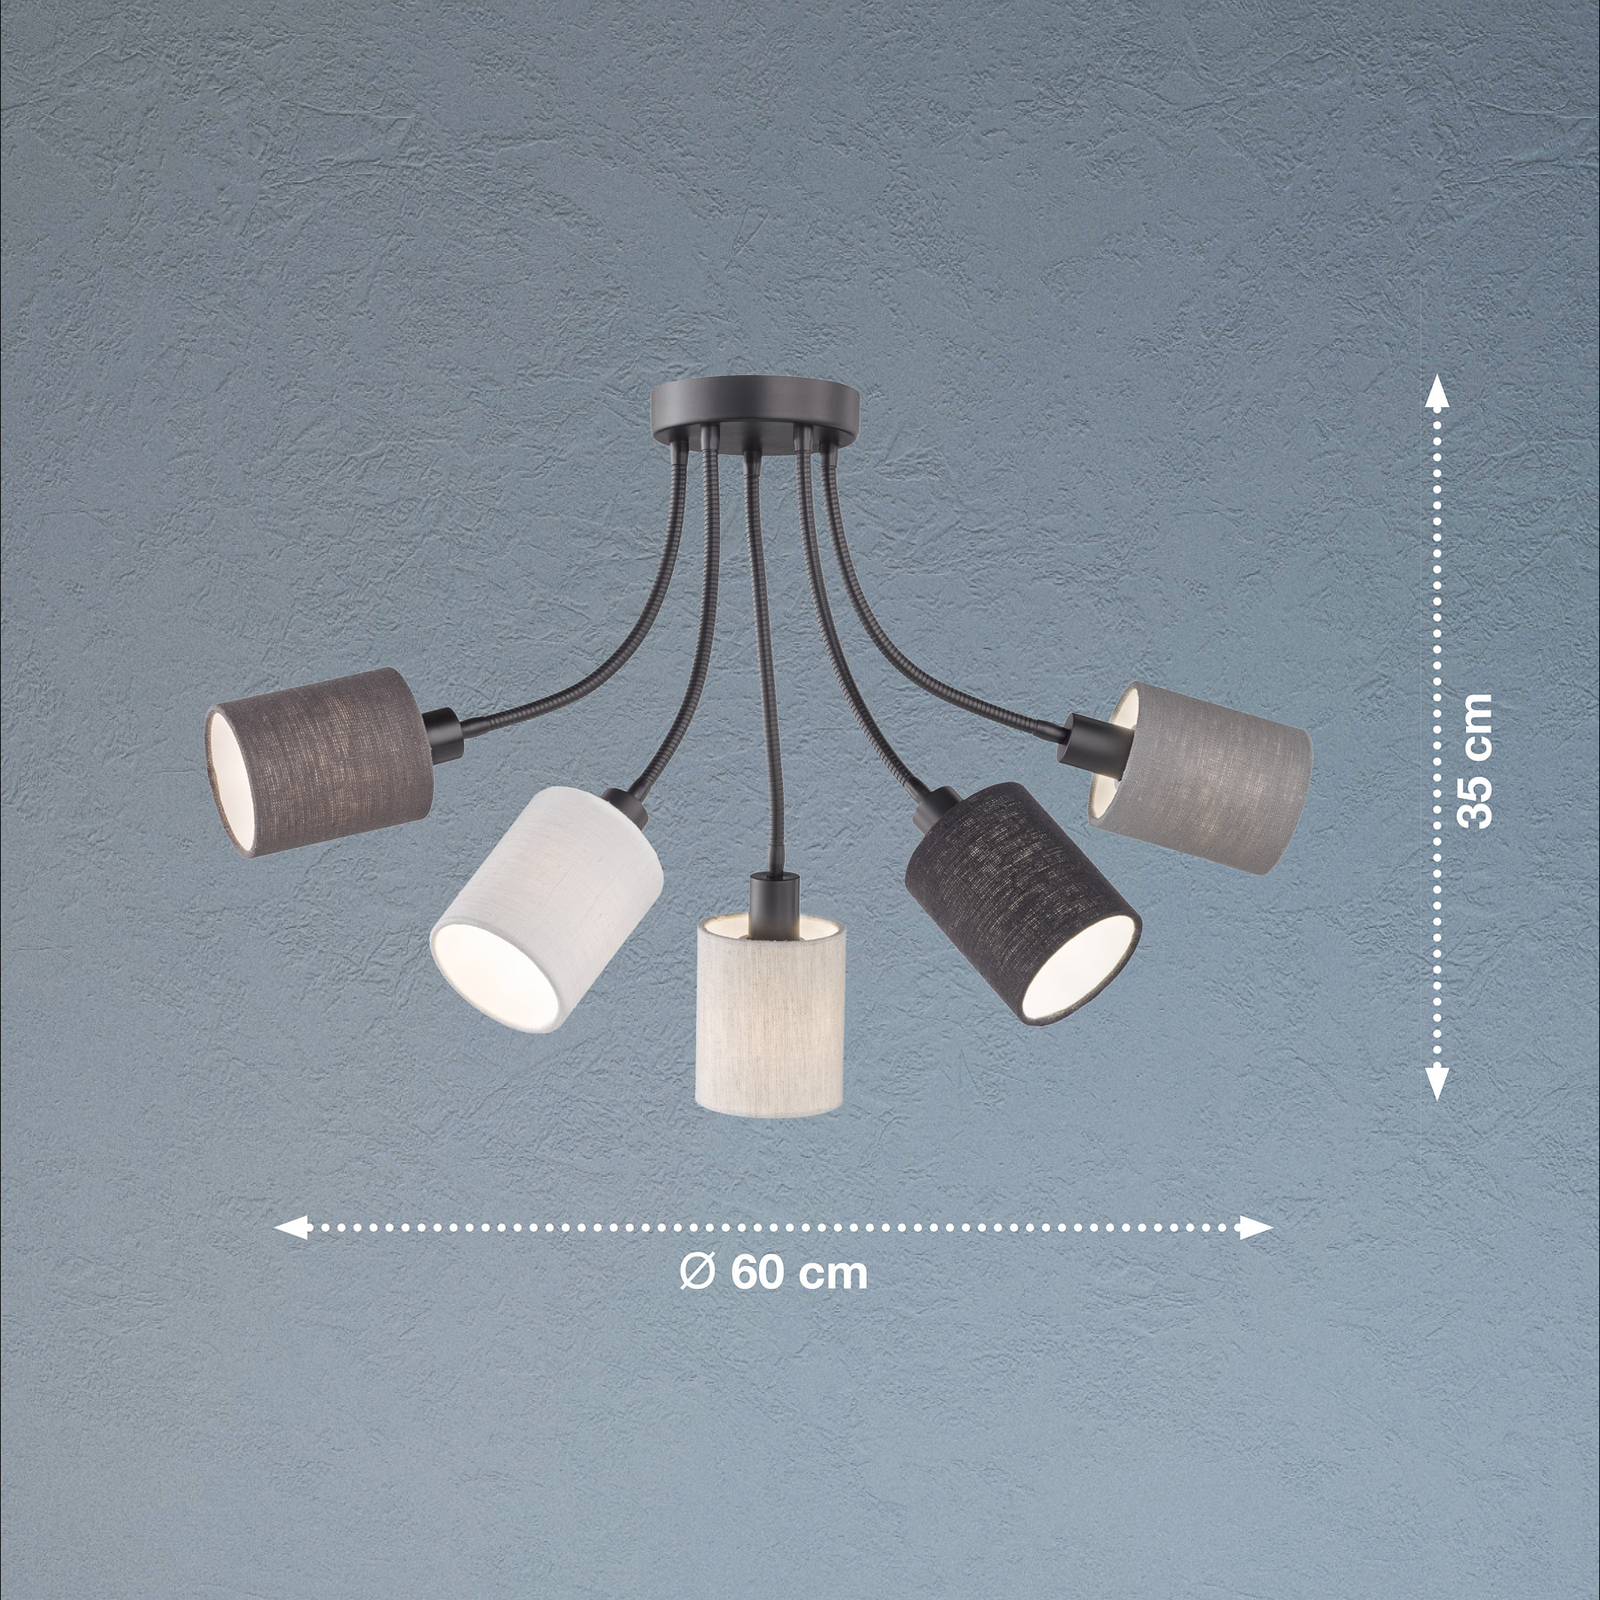 Koi ceiling light fabric lampshades, five-bulb